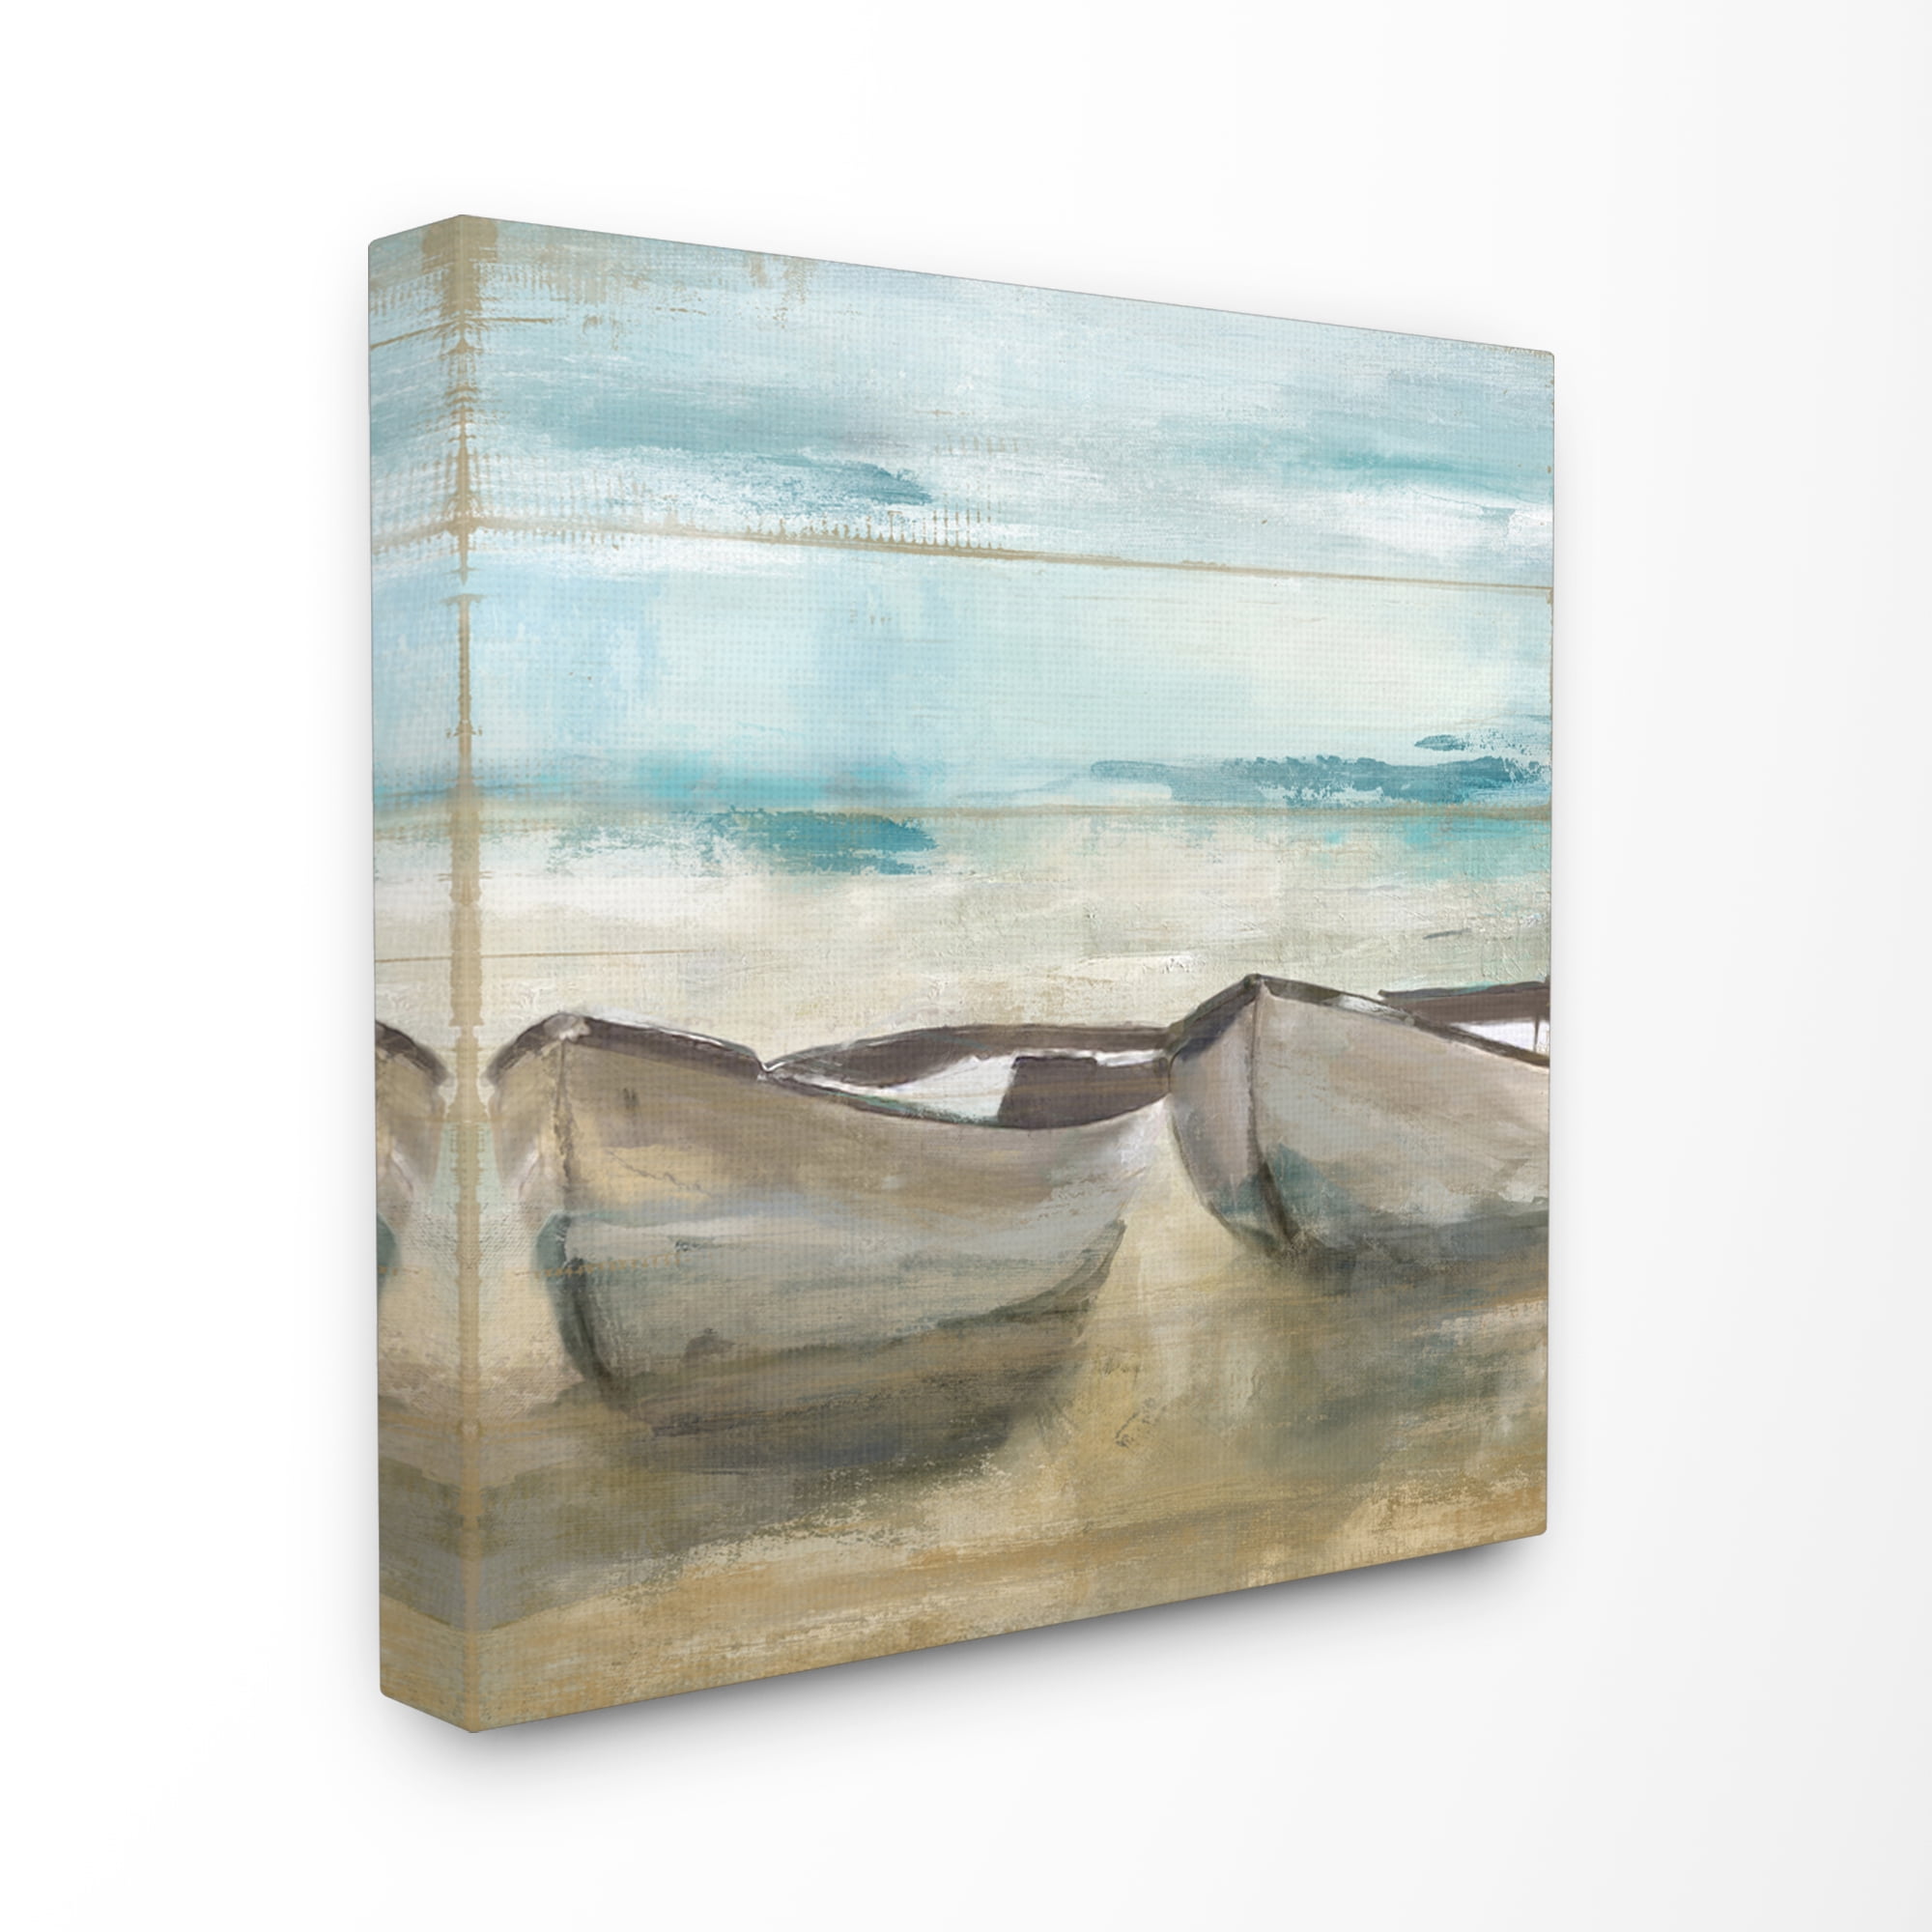 The Stupell Home Decor Row Boat in The Sand Ocean Shore Scene Framed Giclee Texturized Art Multi-Color 24 x 30